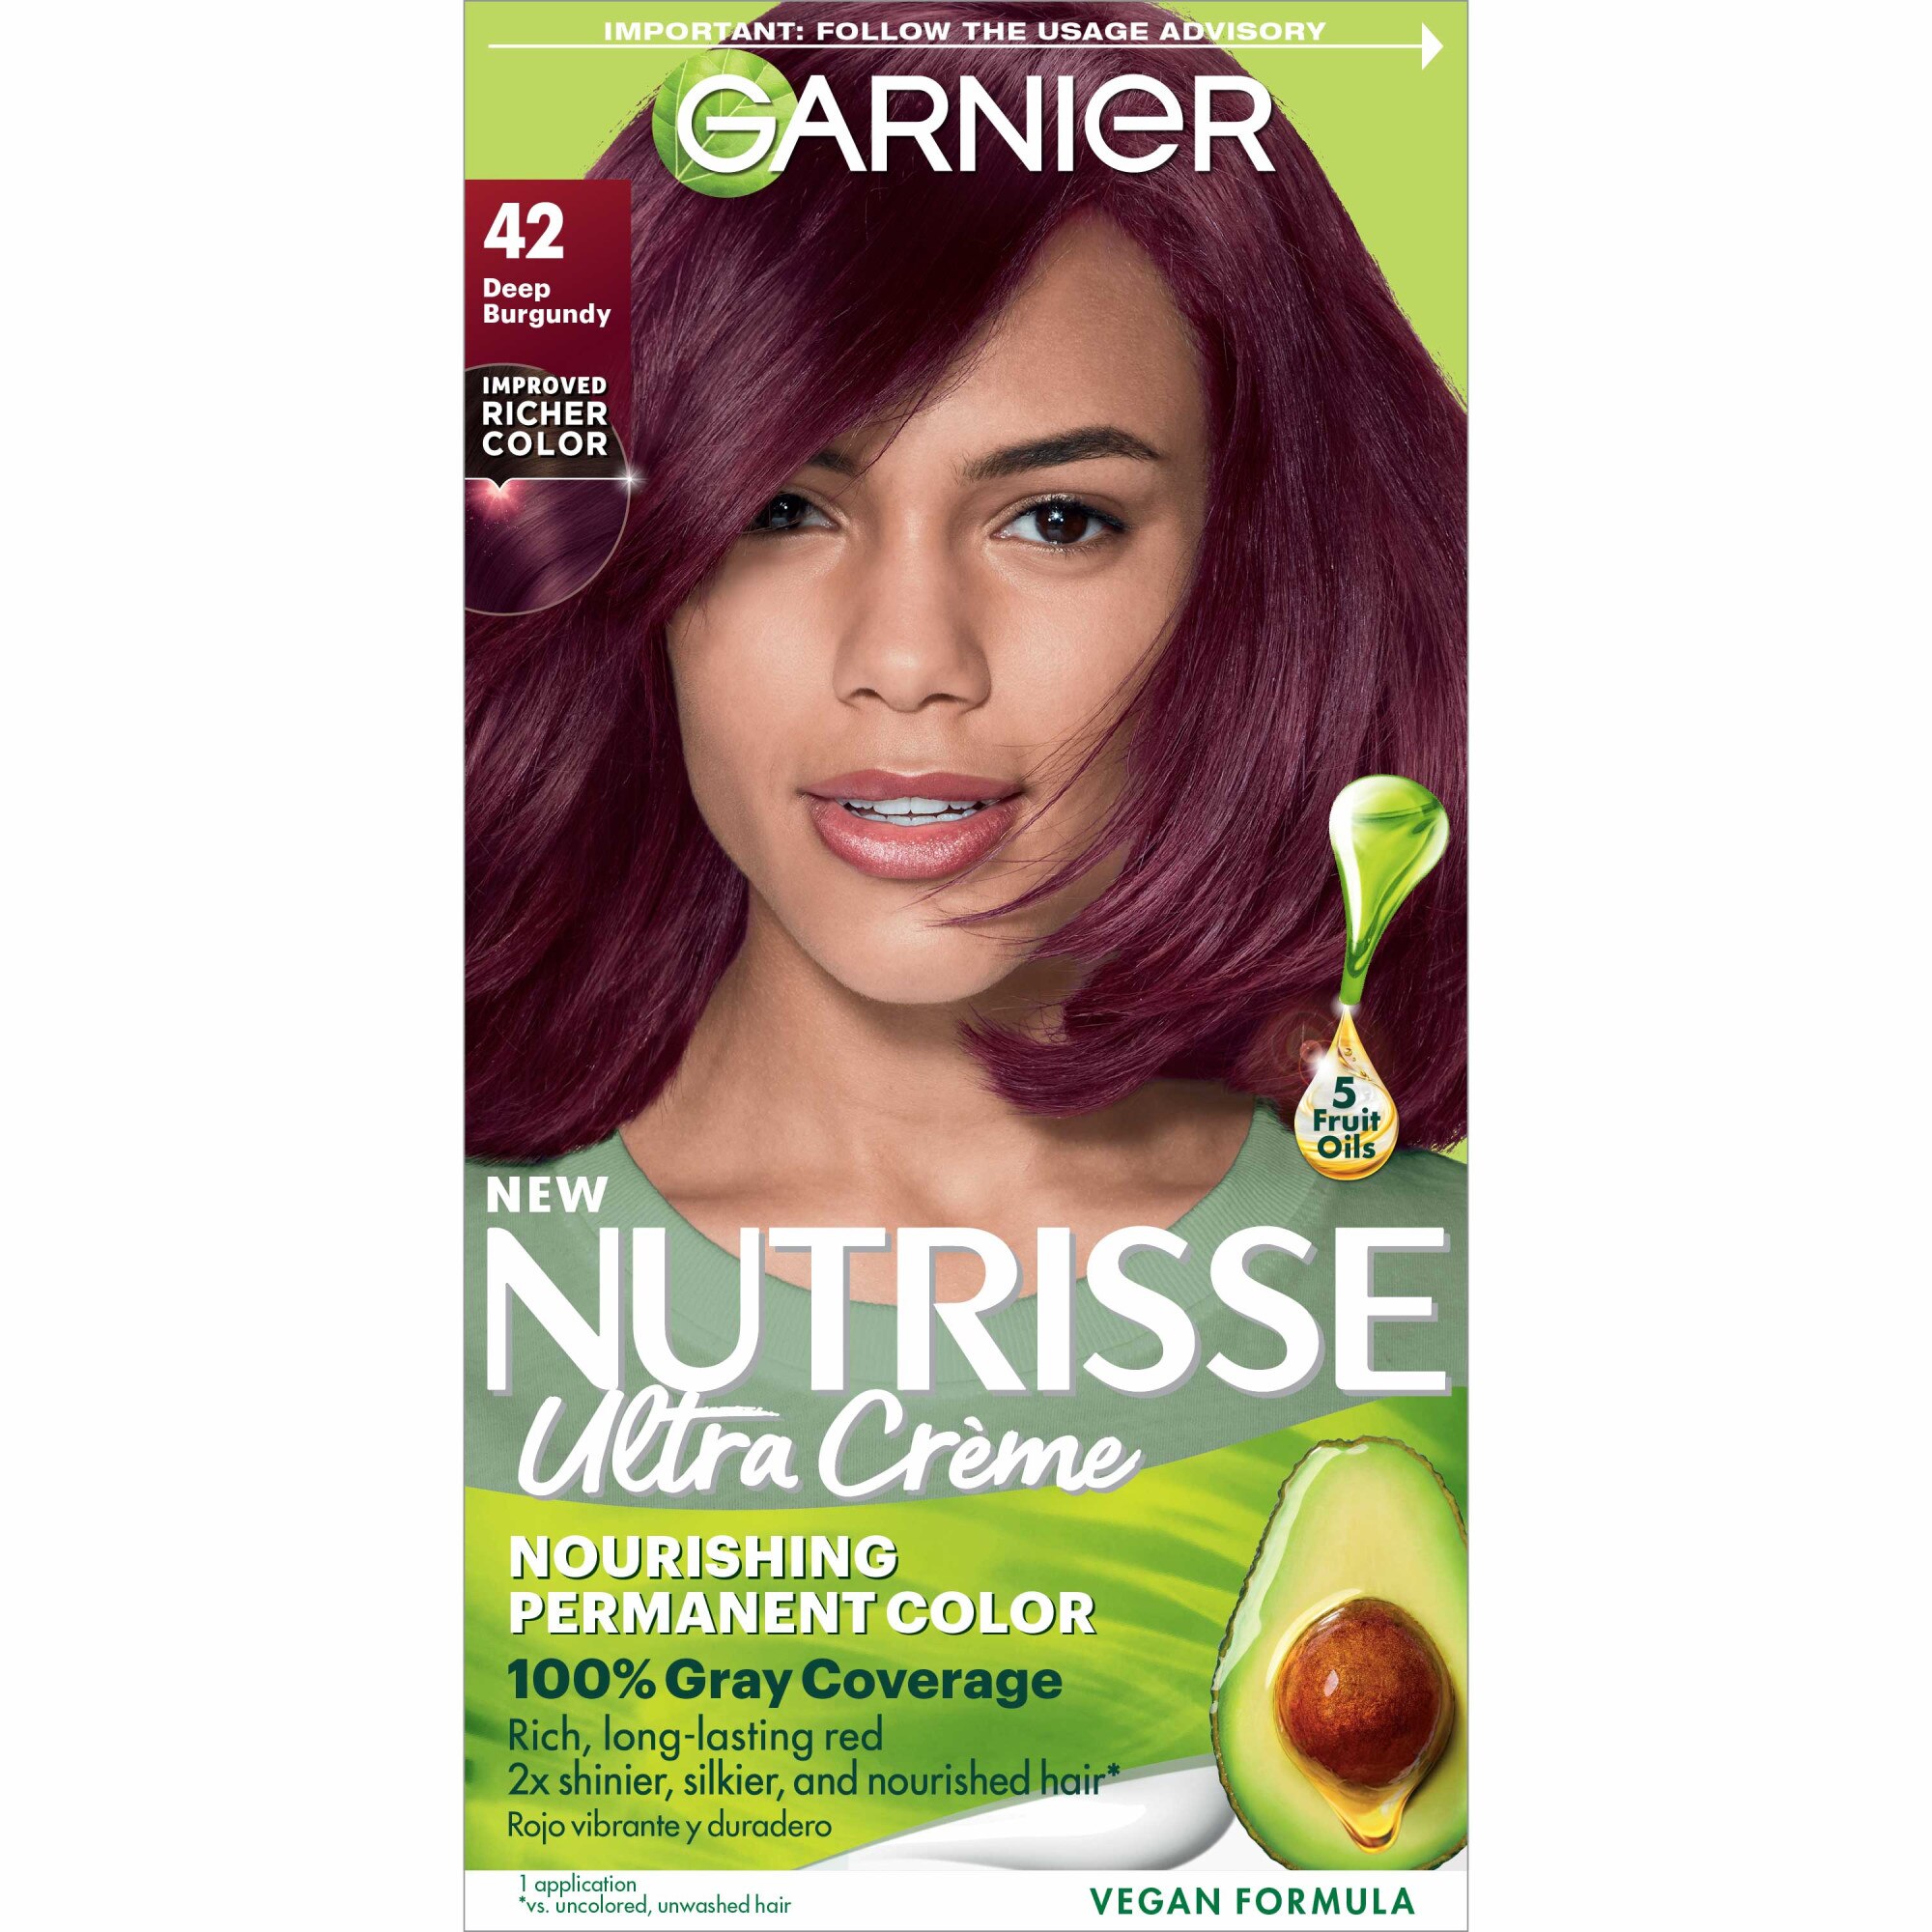 Garnier Nutrisse Nourishing Permanent Hair Color Creme, 42 Deep Burgundy - 1 , CVS